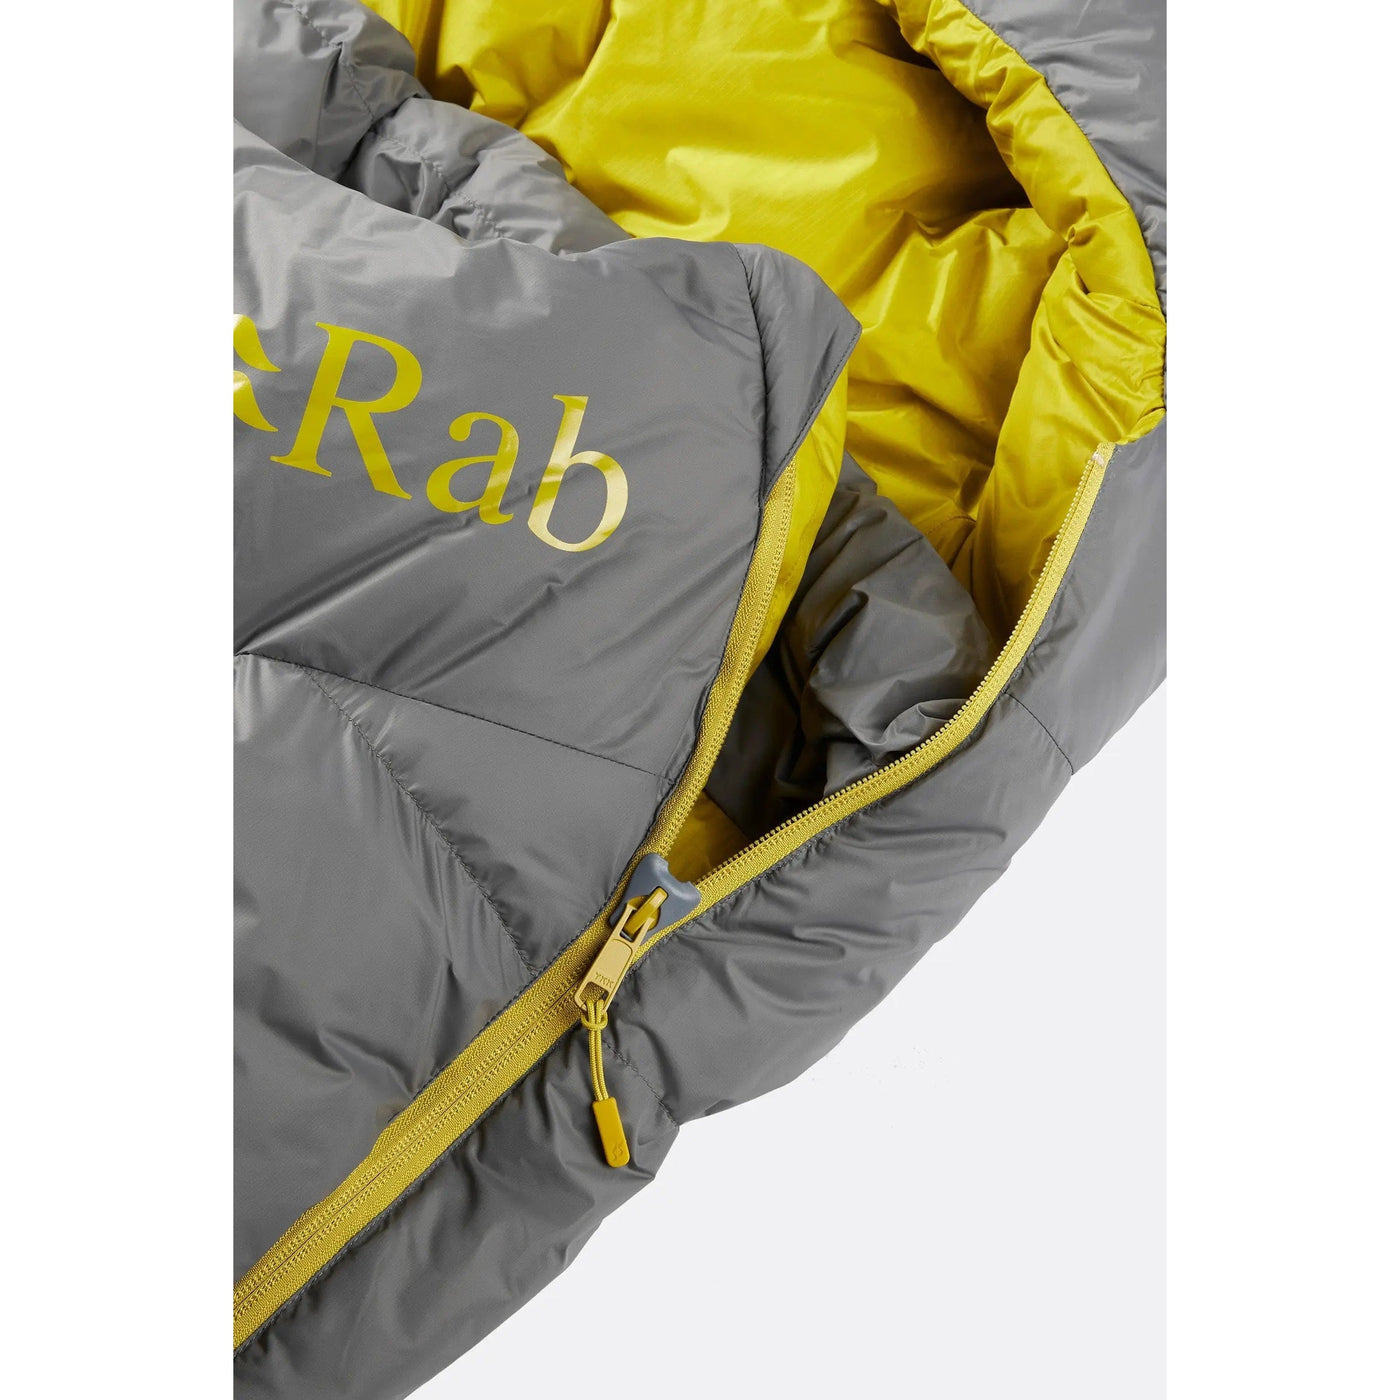 Rab Ascent Pro 400 Sleeping Bag